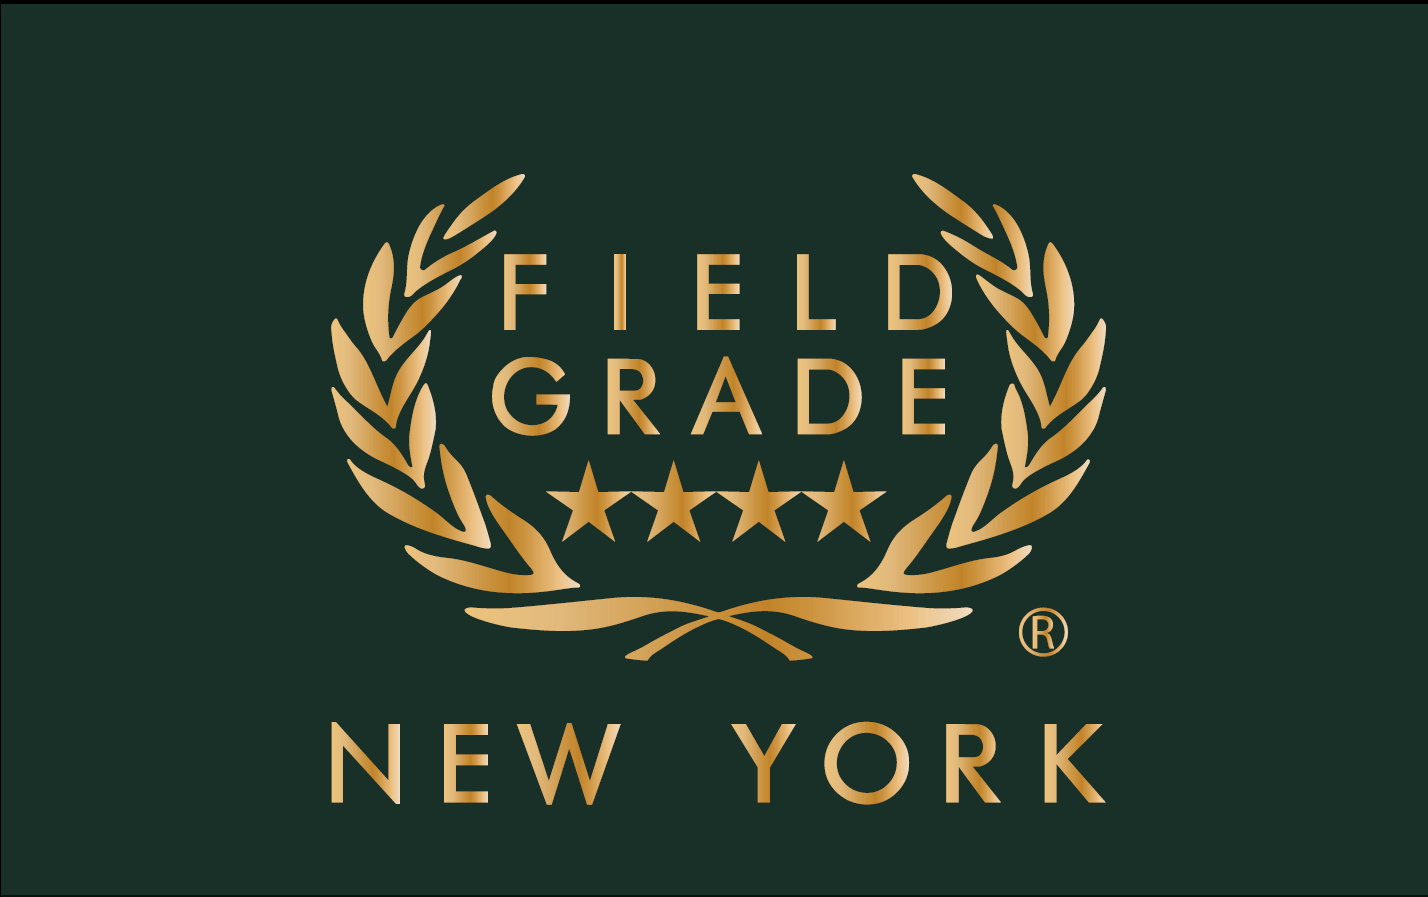 Green and Gold Logo - MIAC MERCHANDISING » Field Grade Logo Green Gold